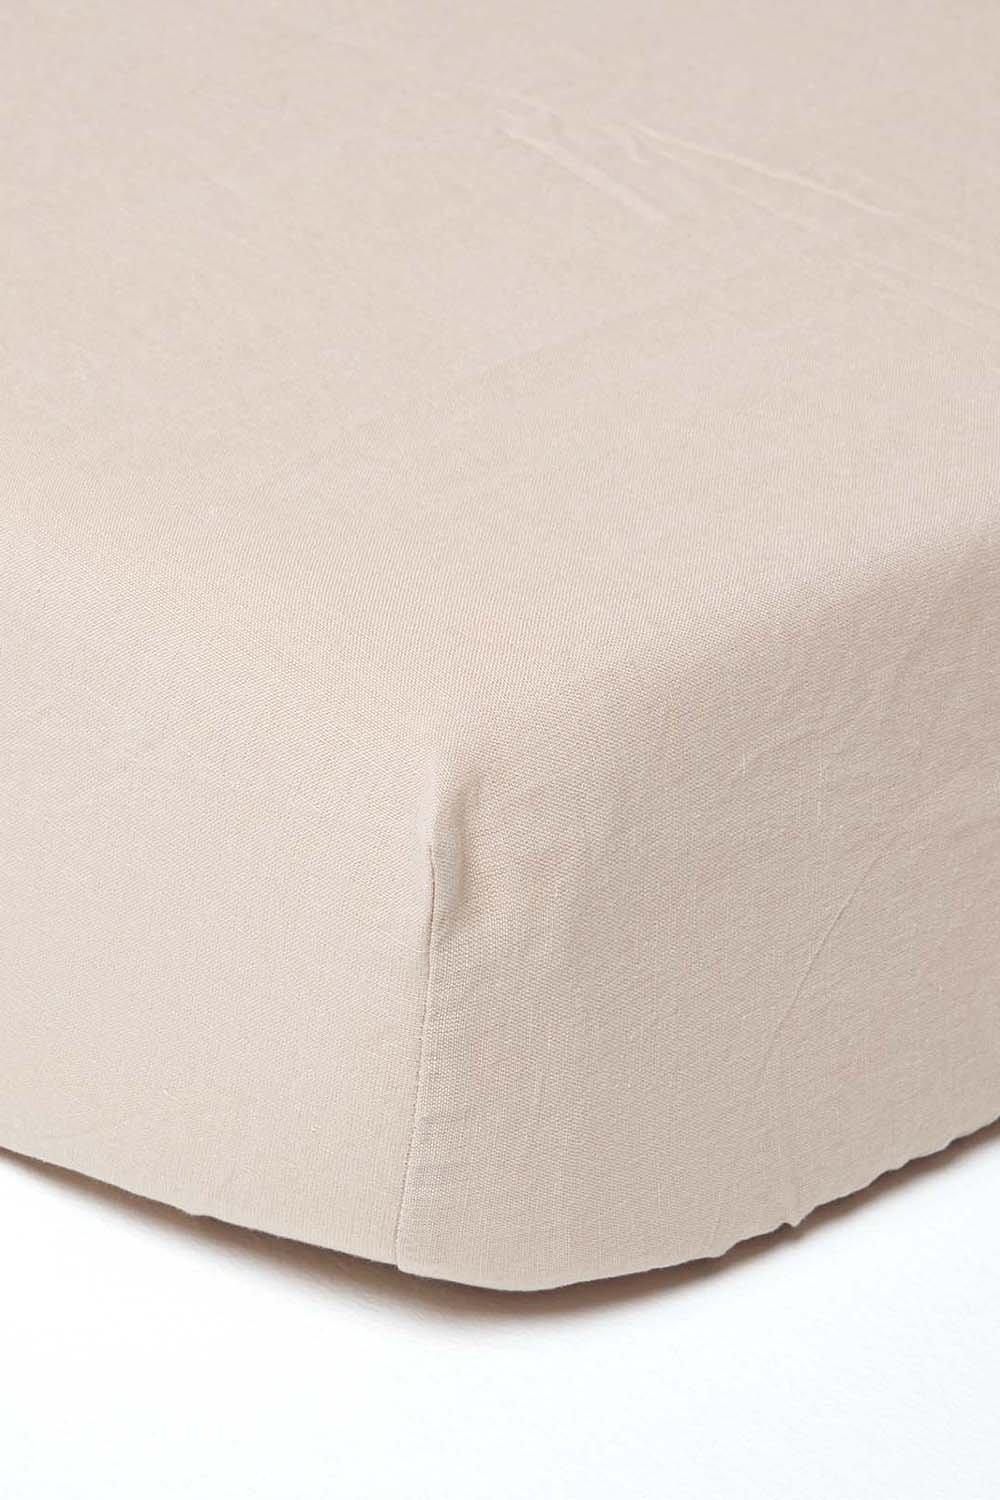 Luxury Soft Plain Linen Fitted Sheet 12 inch Deep